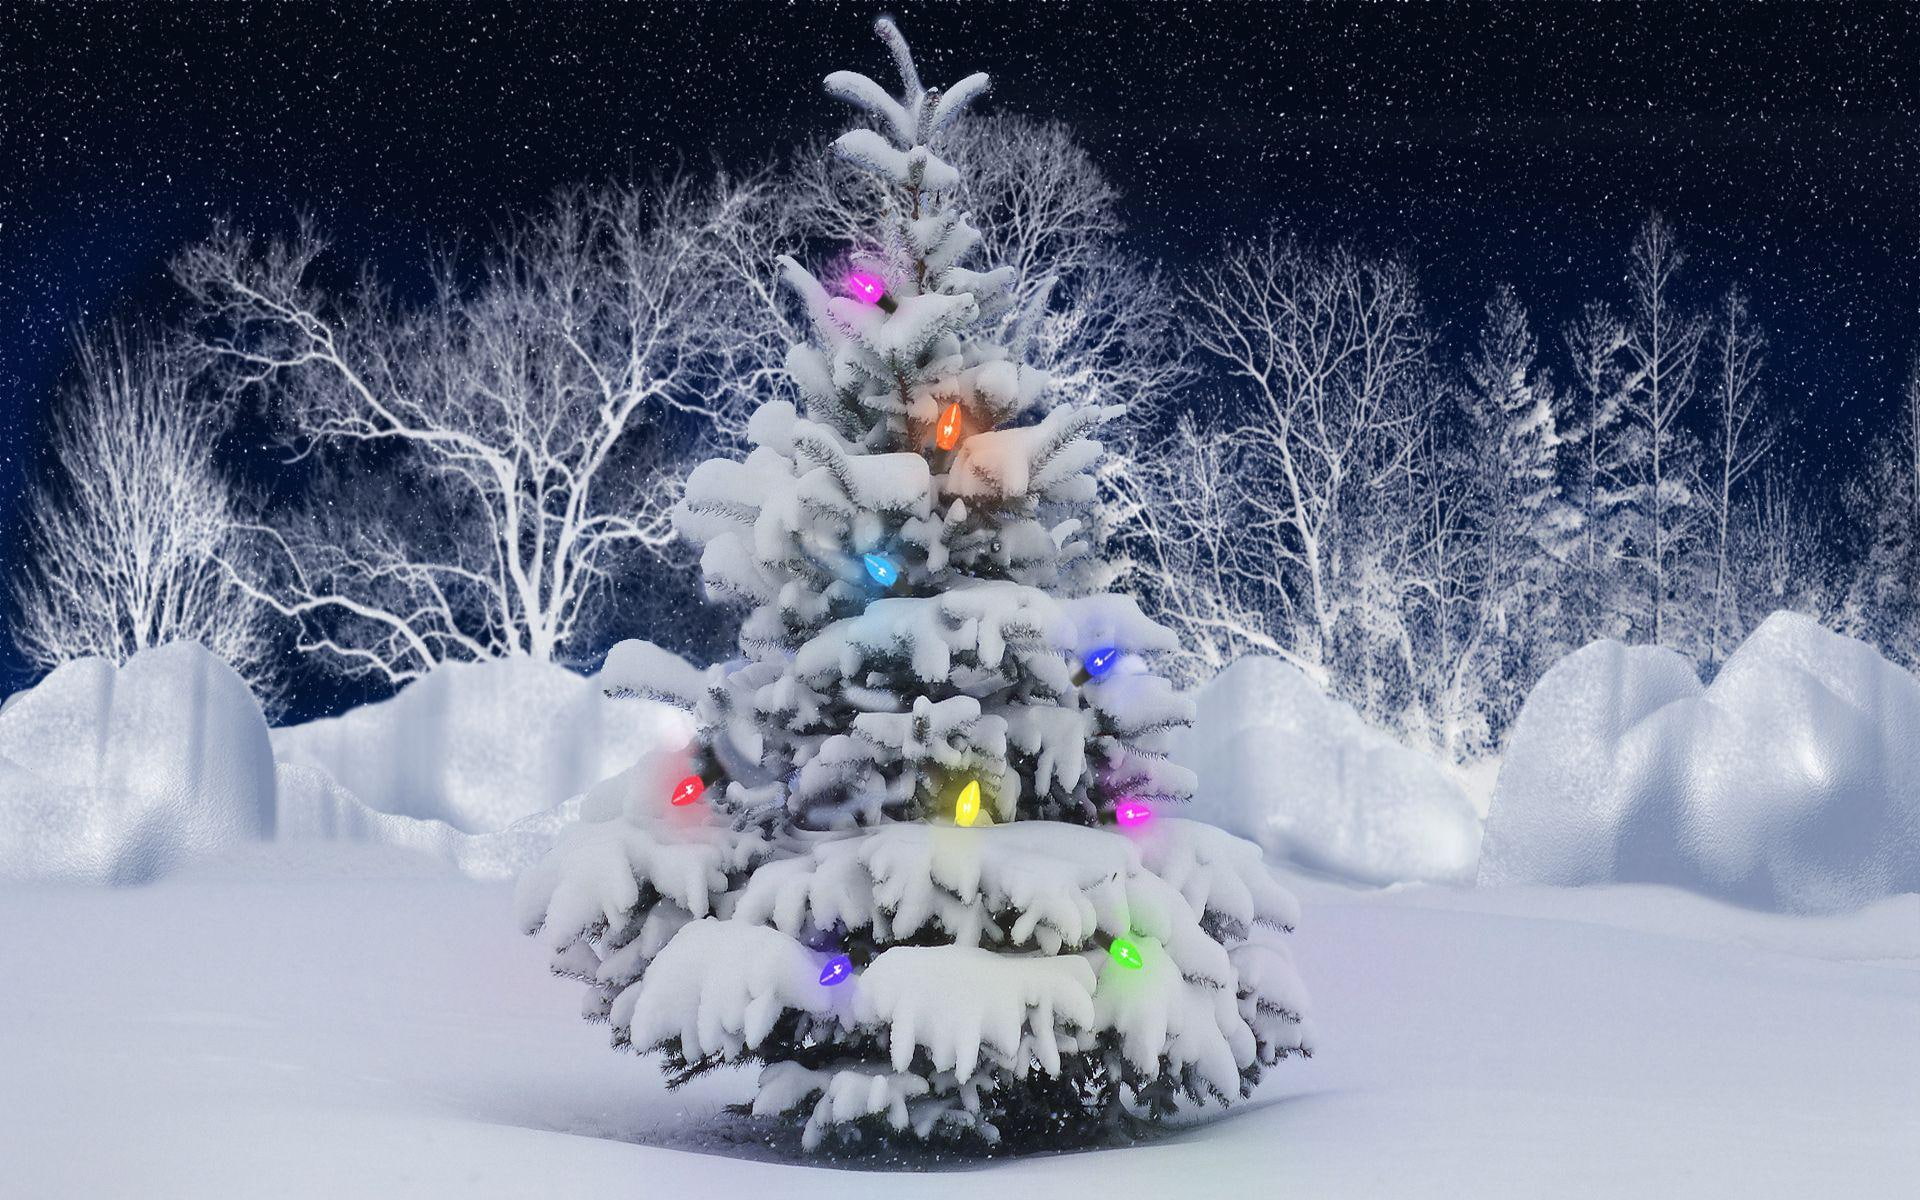 Outdoors Christmas Tree, snow covered pine tree painting, holidays